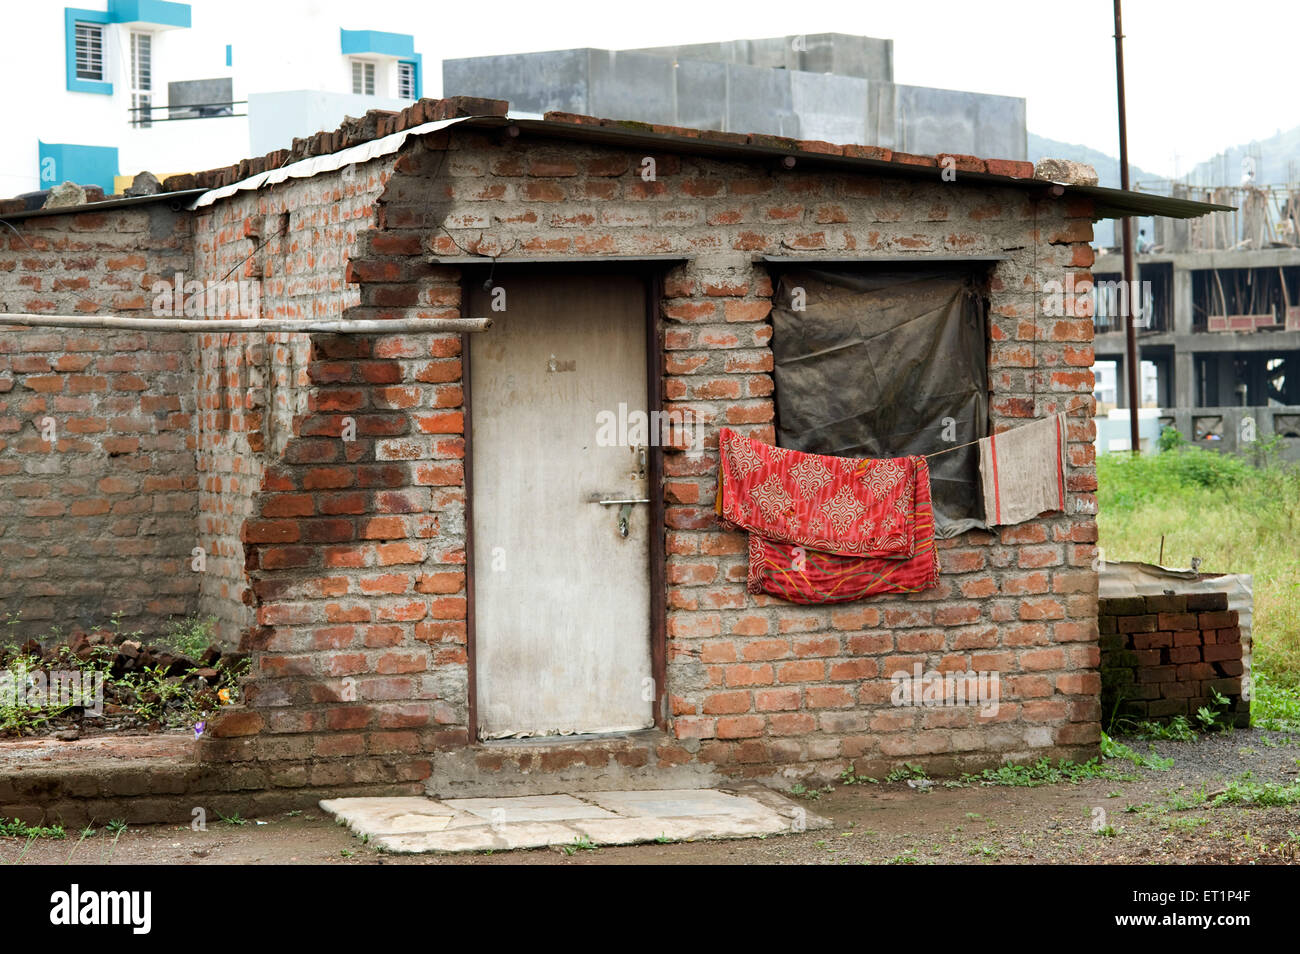 Freiliegende Ziegelwand Haus geschlossene Tür Kunststoff-Fenster Wäsche trocknen Indien Stockfoto